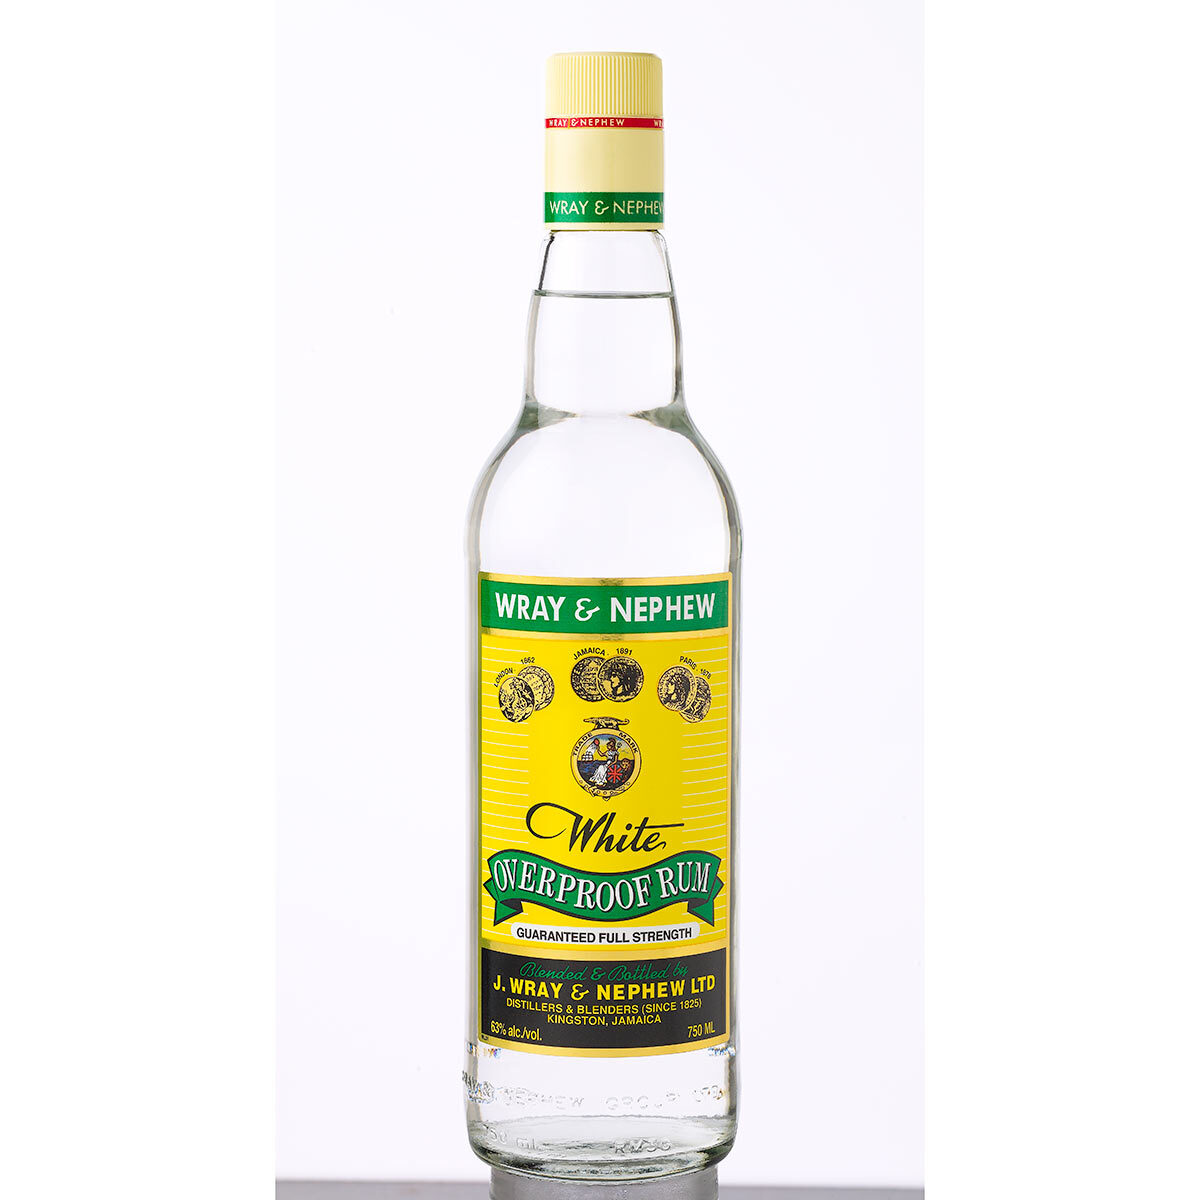 Image of Wray & Nephew Rum on a white background